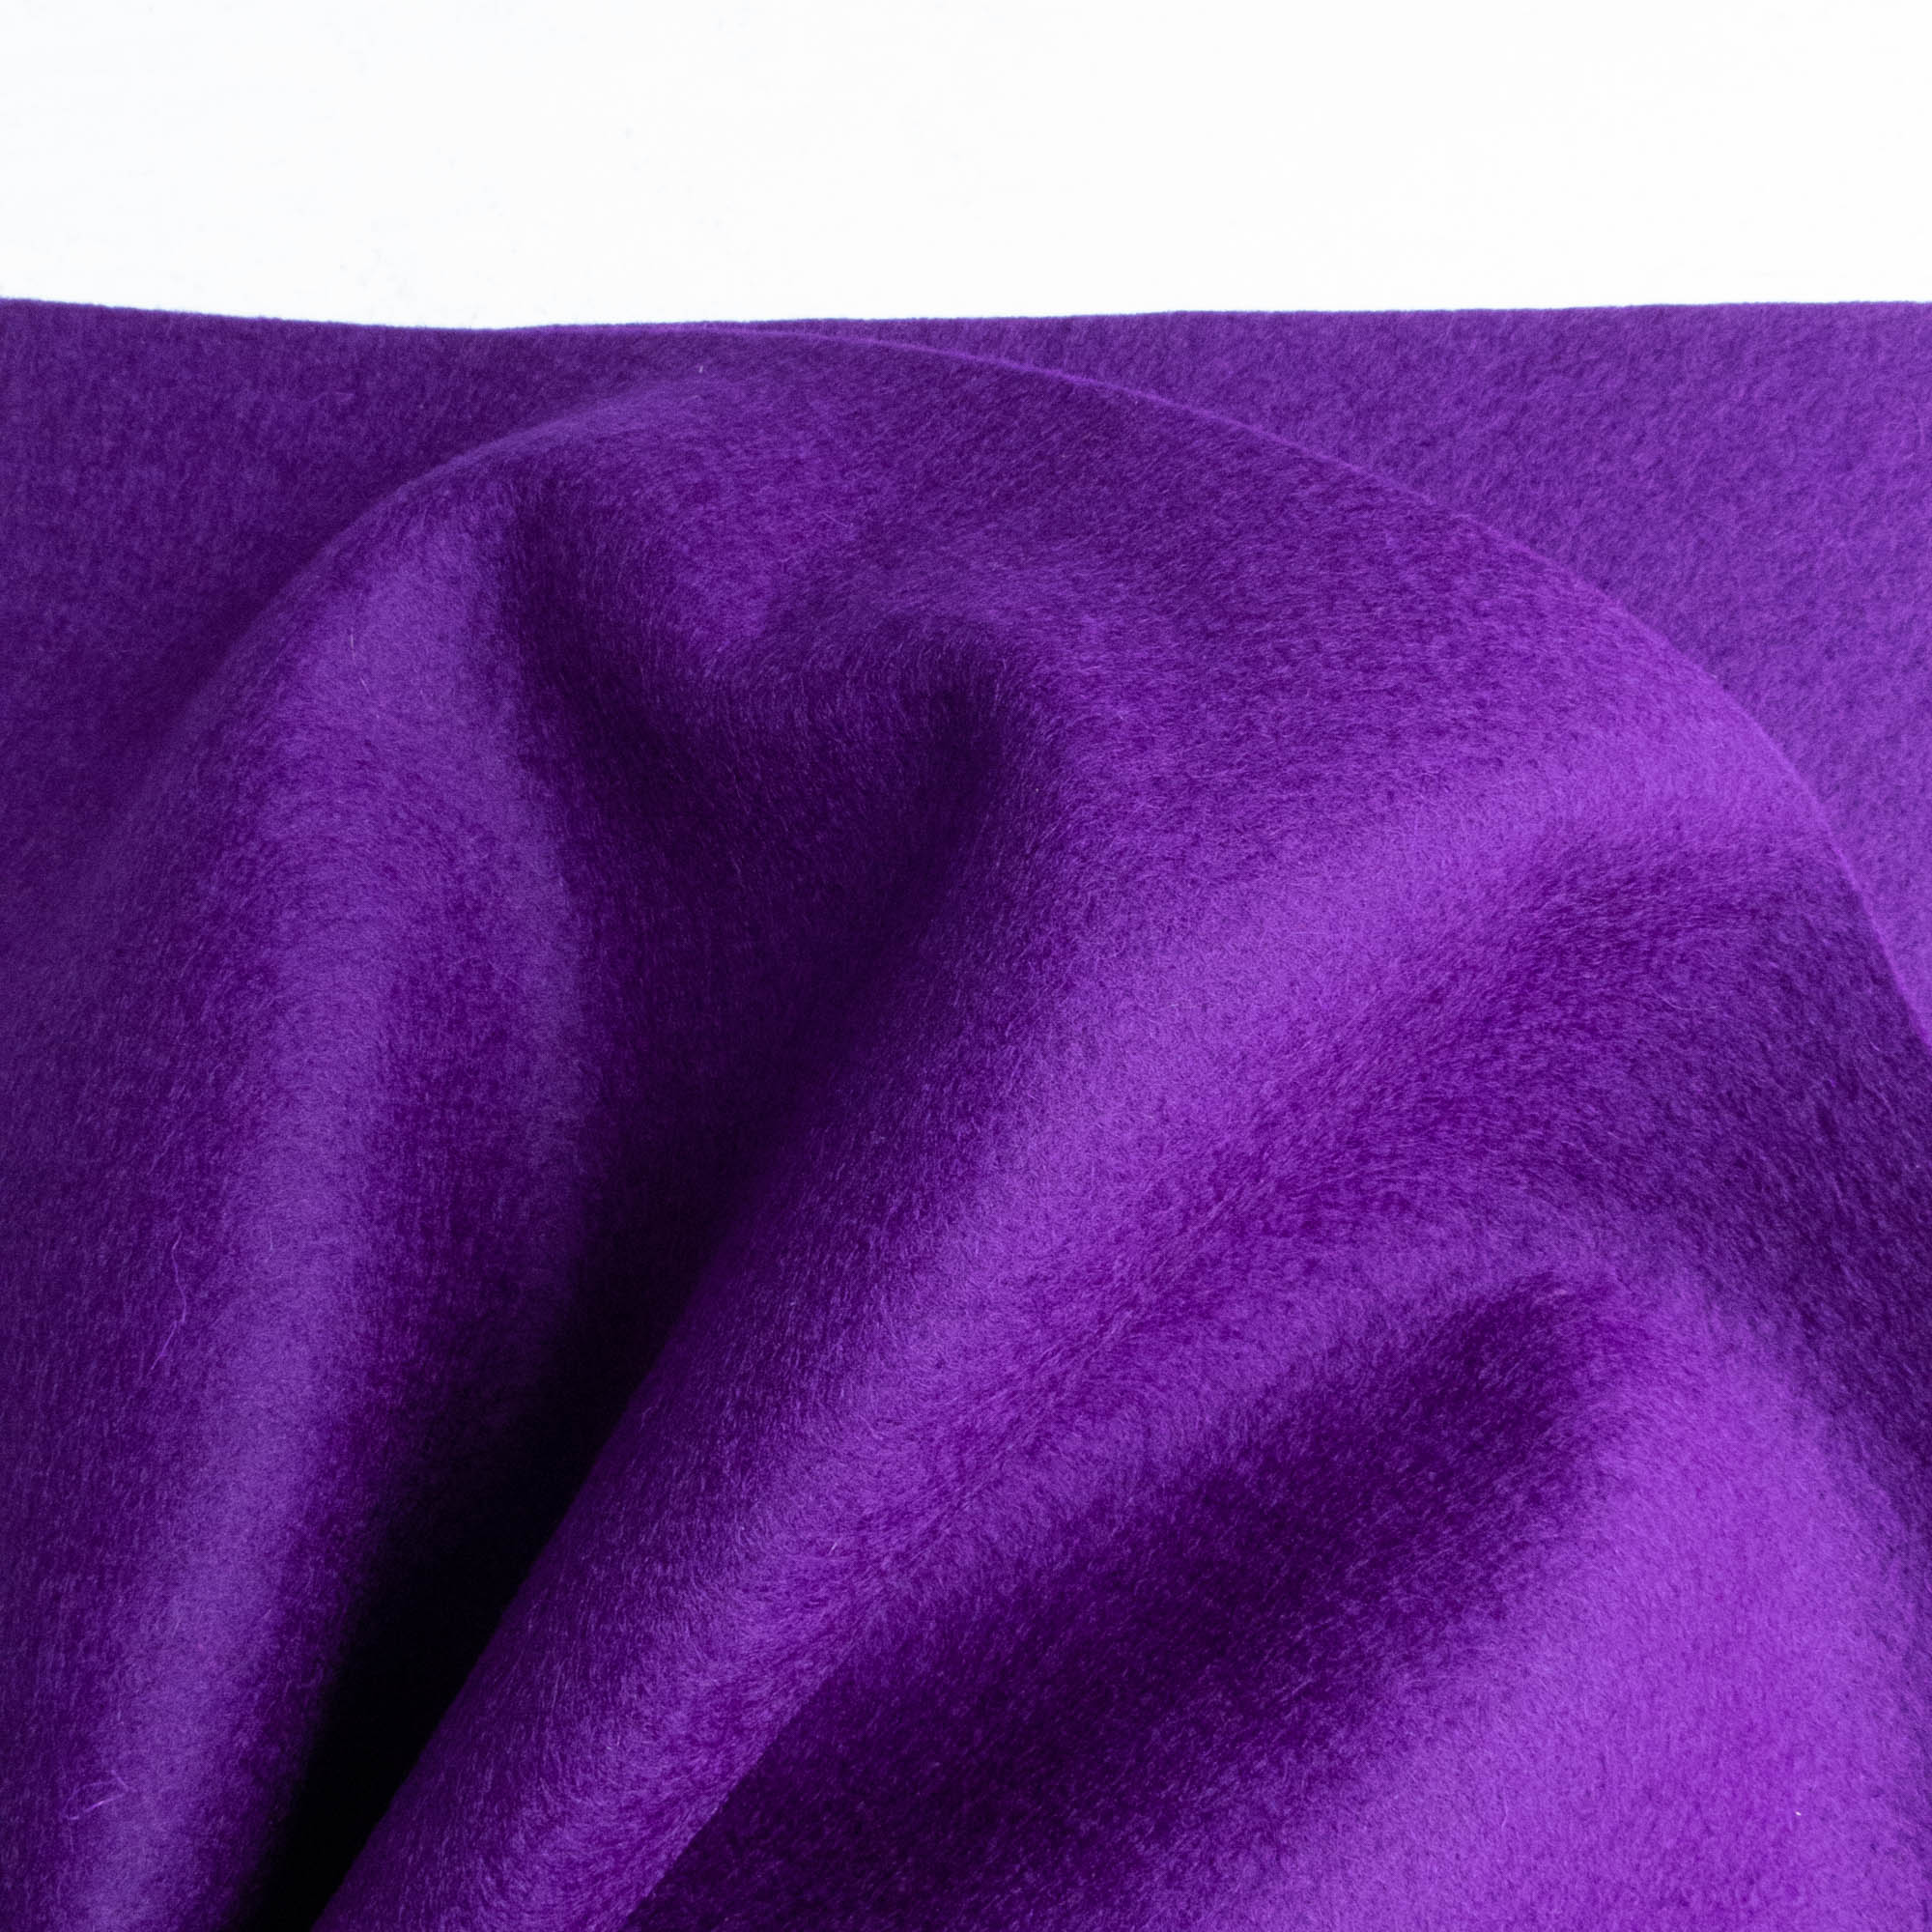 Wool Felt Sheet Collection - Purples